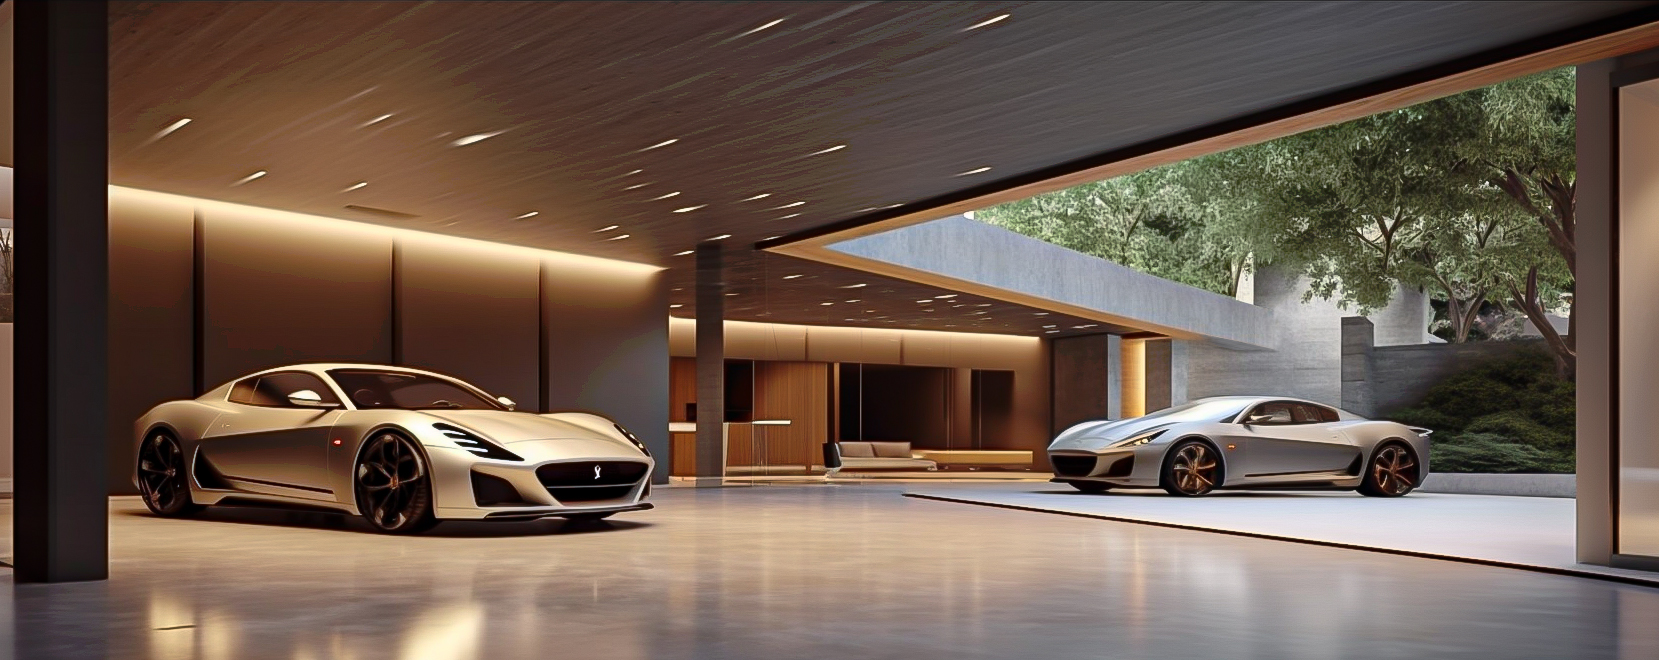 luxury-private-garage-vielliard-francheteau-architects